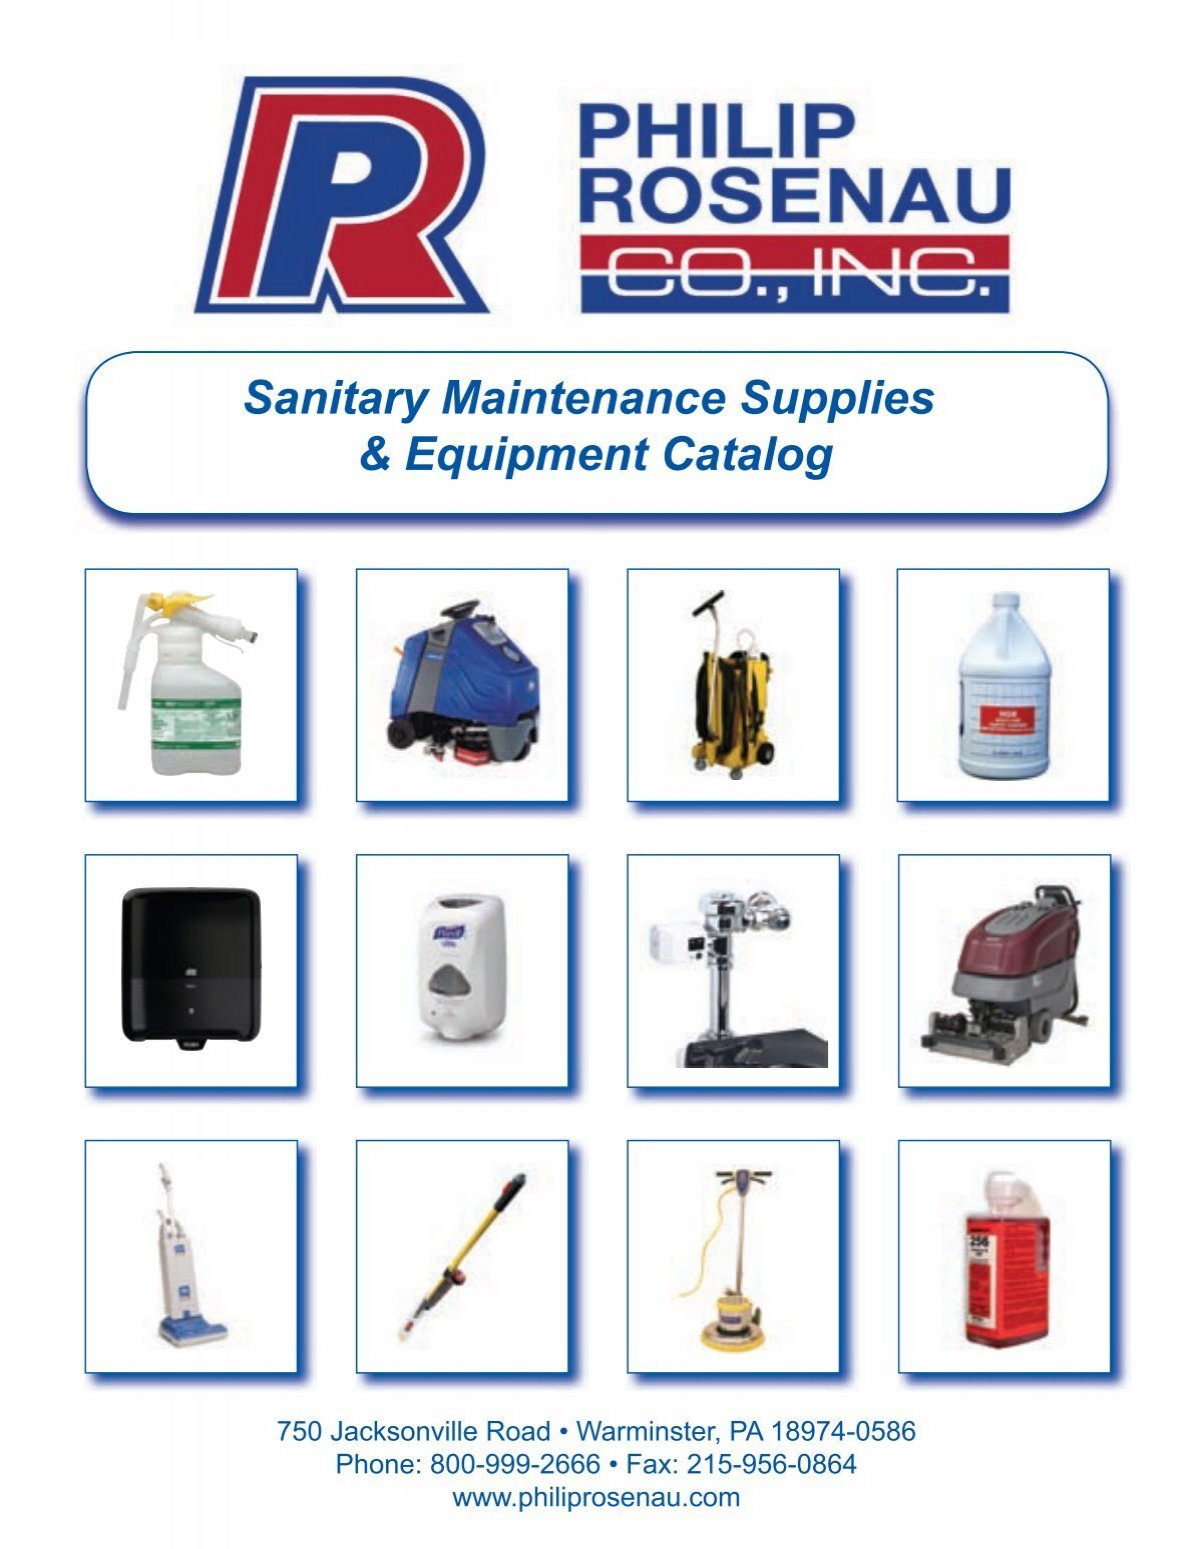 Sanitary Maintenance Supplies & Equipment Catalog